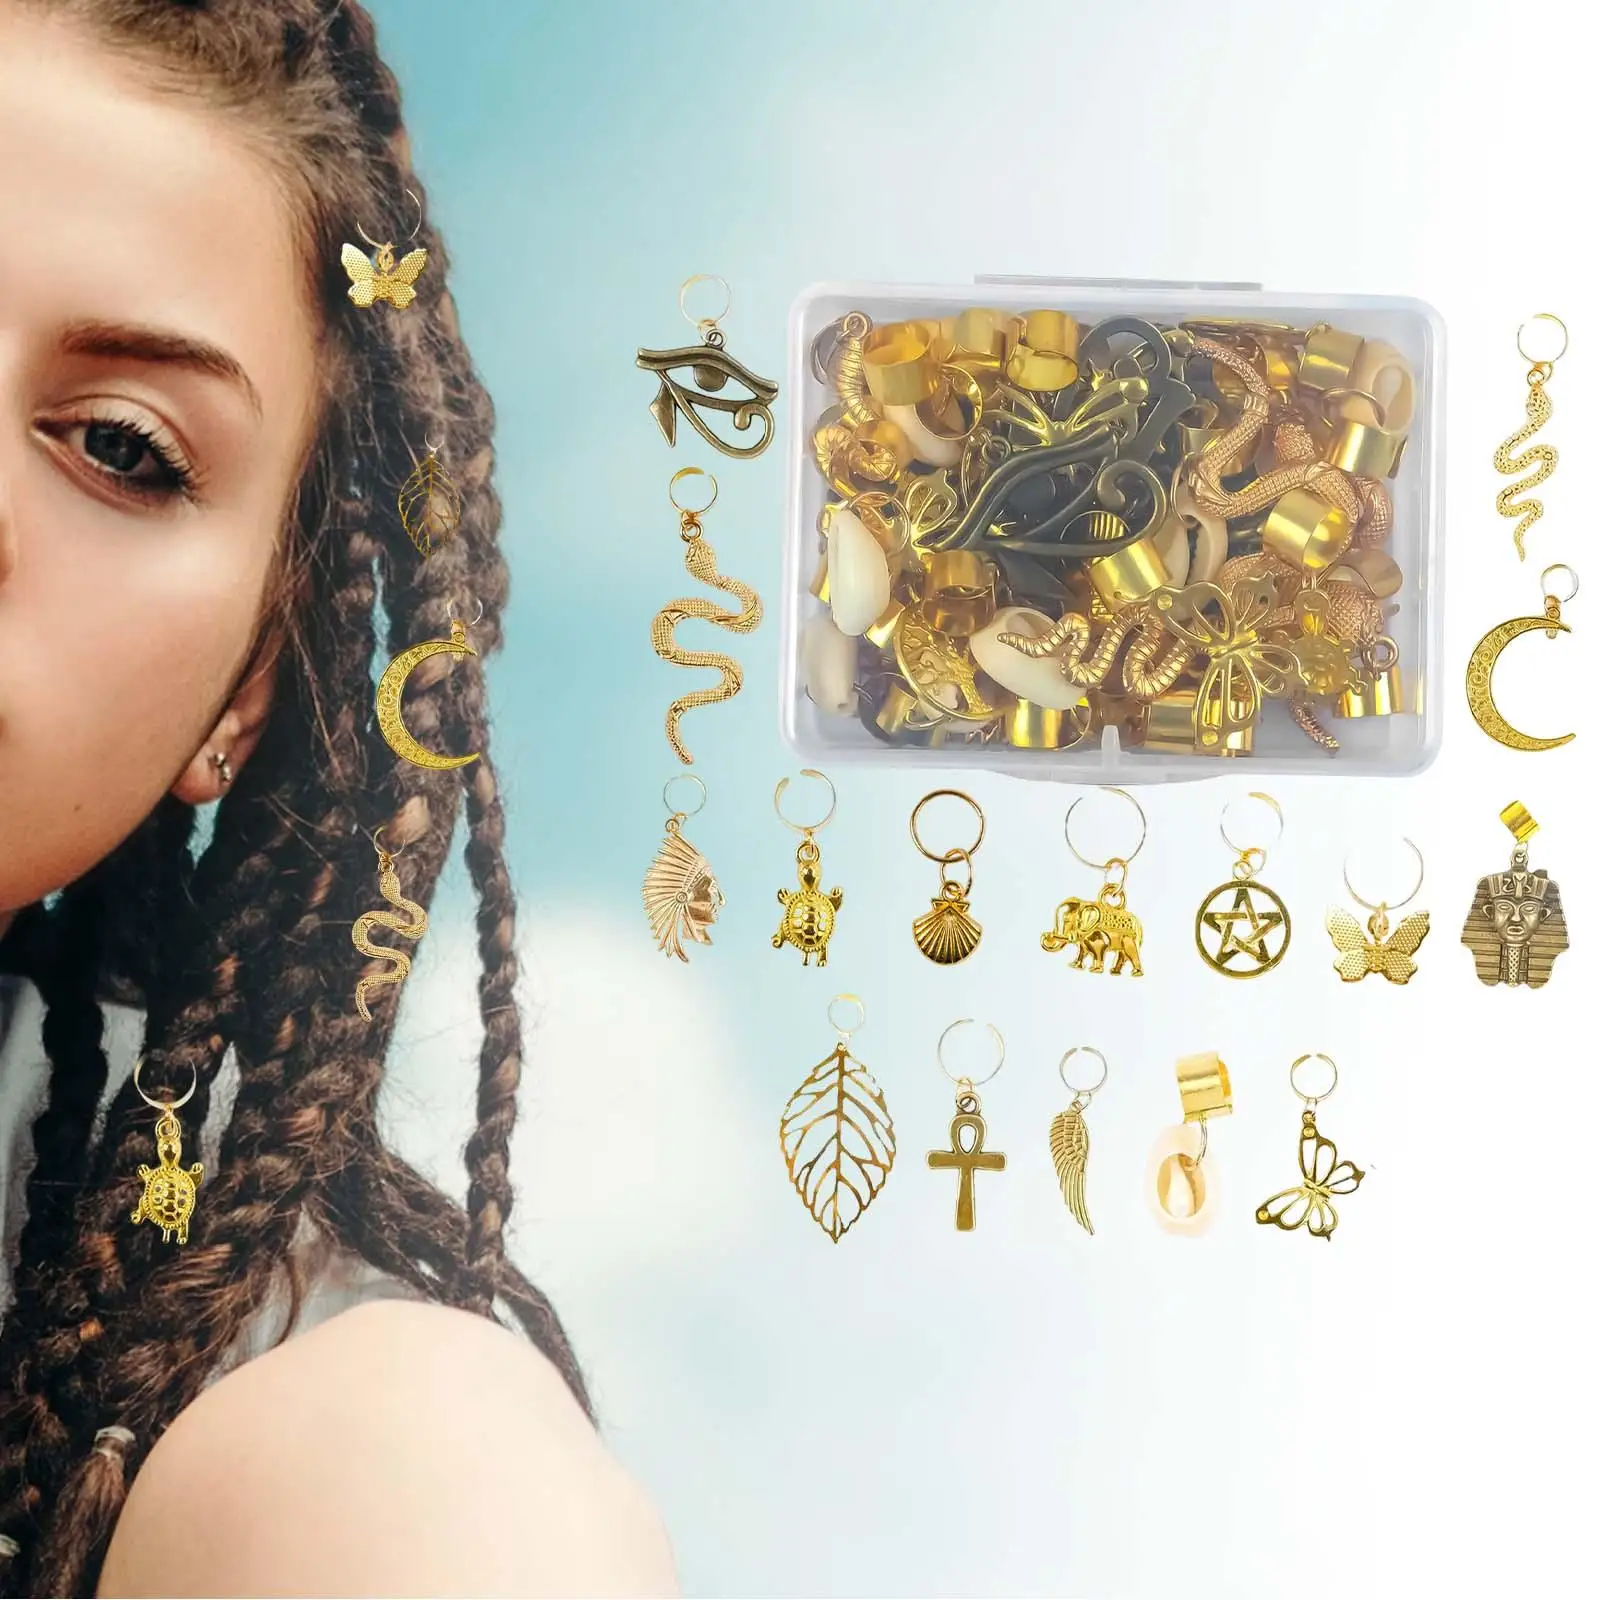 40 Pieces Alloy Dreadlocks Beads Metal Cuffs jewelry for Bracelet Daily Wear